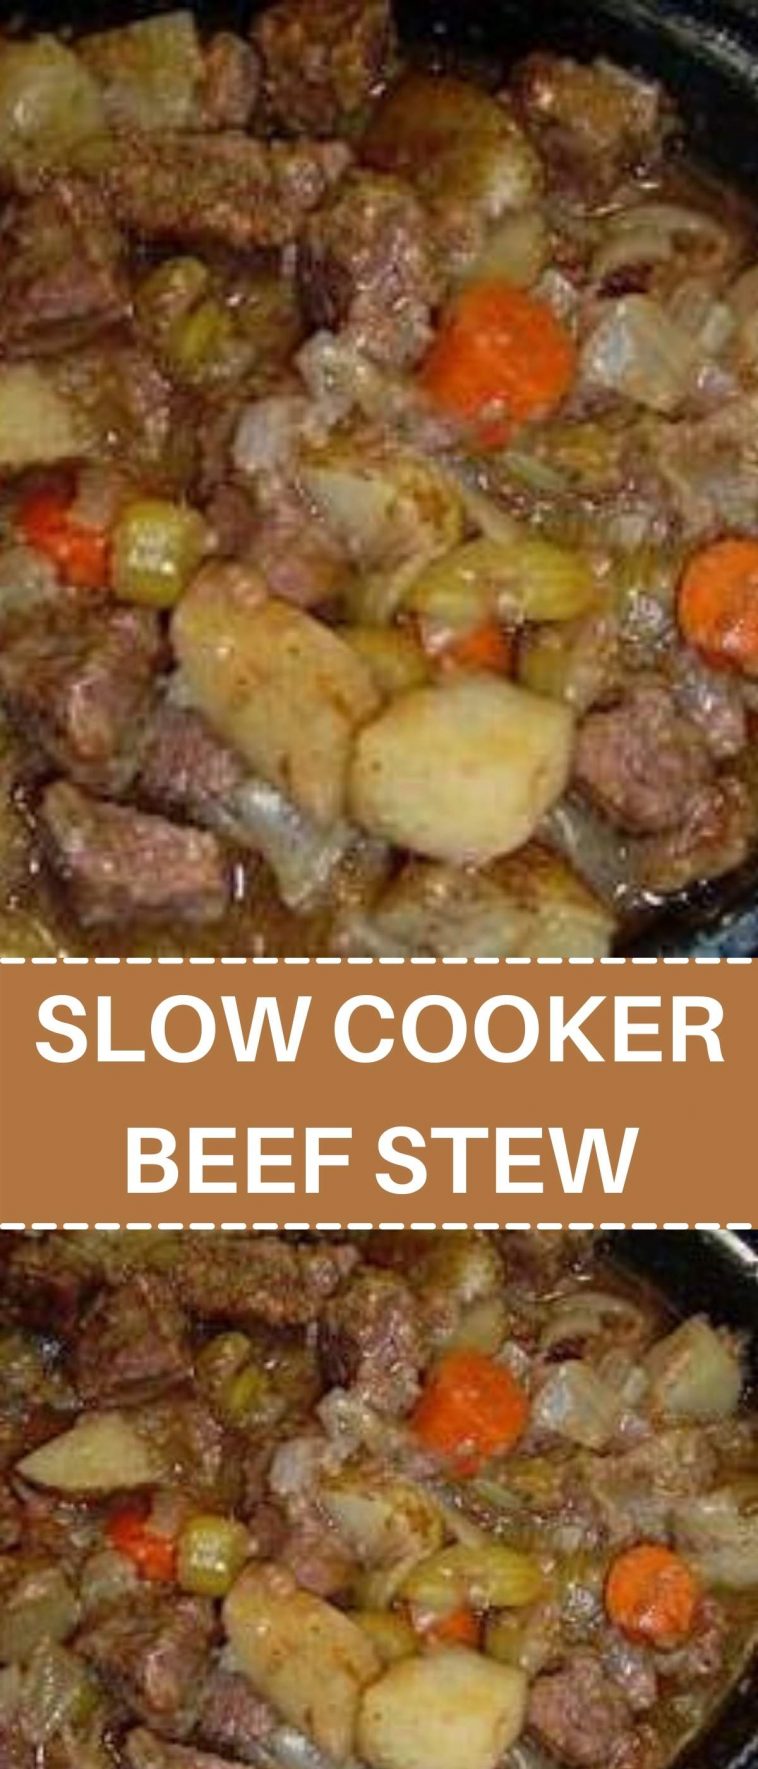 SLOW COOKER BEEF STEW